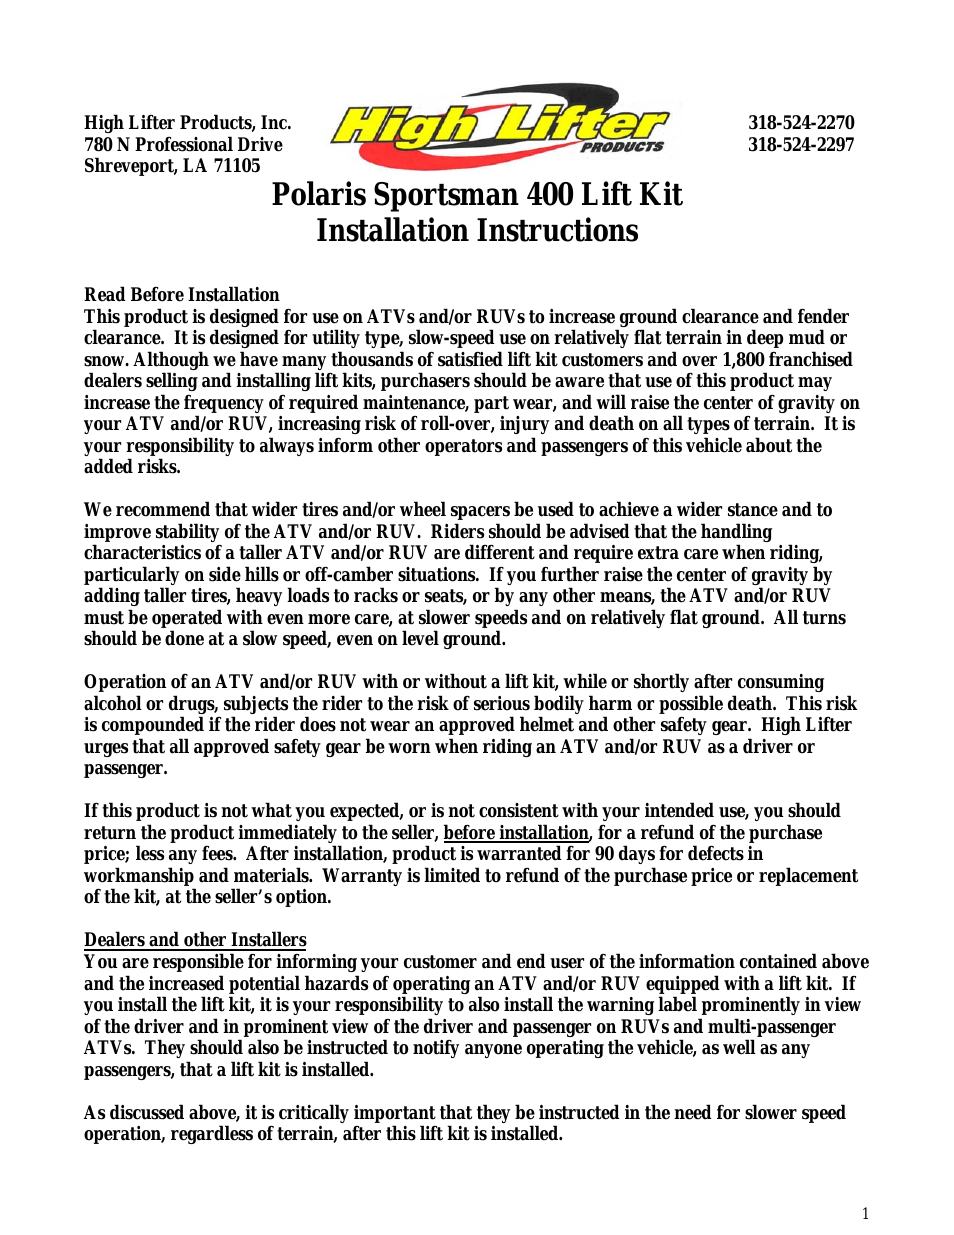 Lift Kit for Polaris Sportsman 400 (08-10)